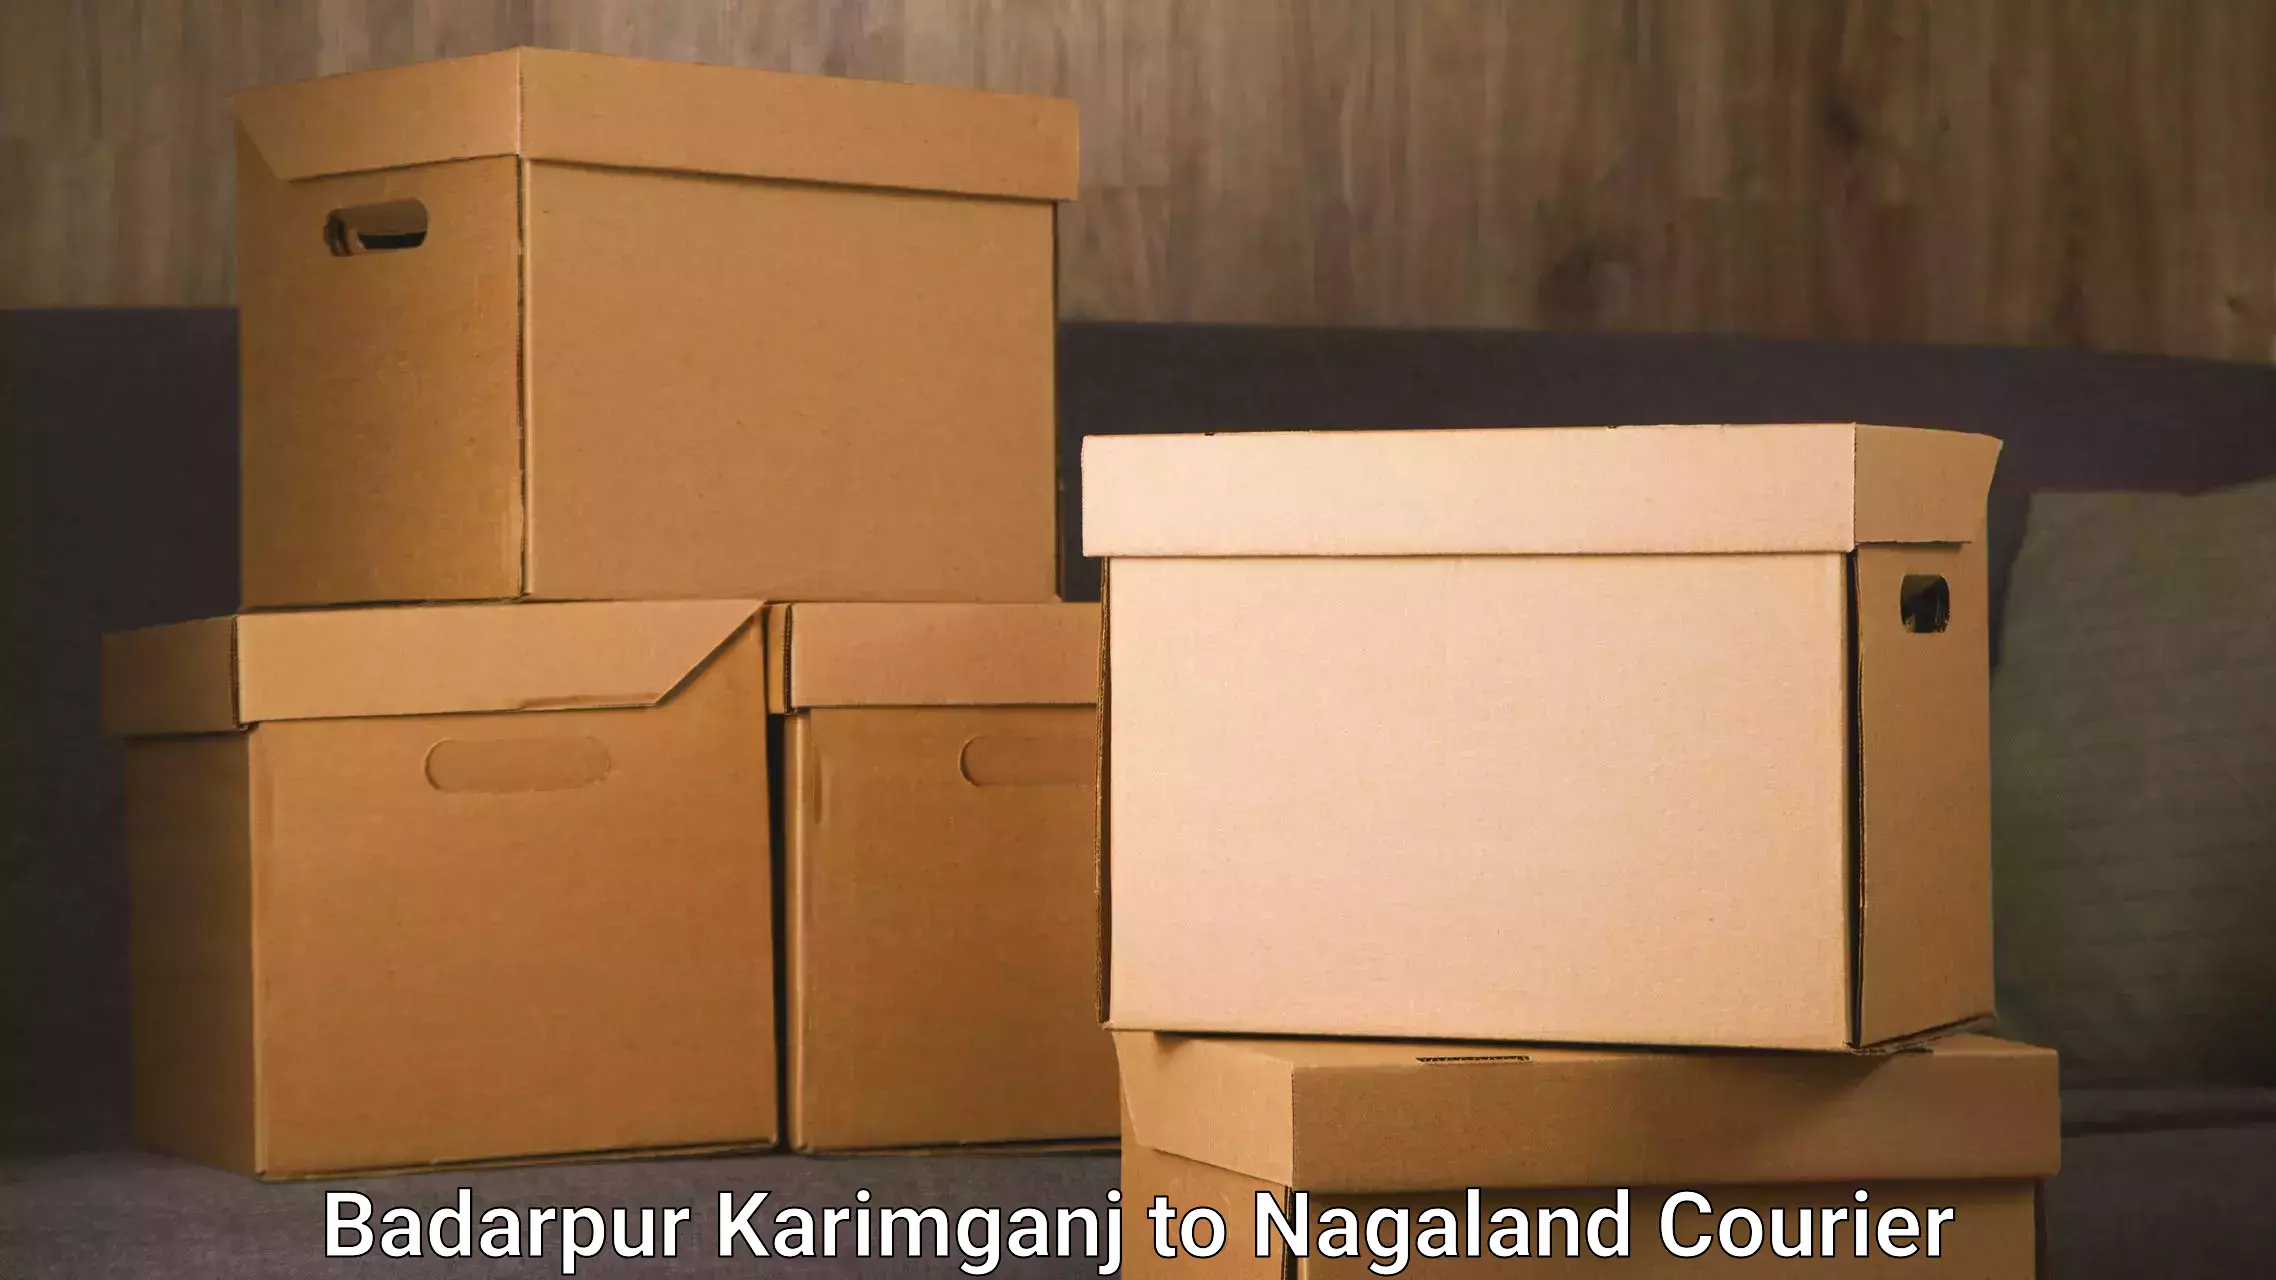 Enhanced tracking features Badarpur Karimganj to Dimapur